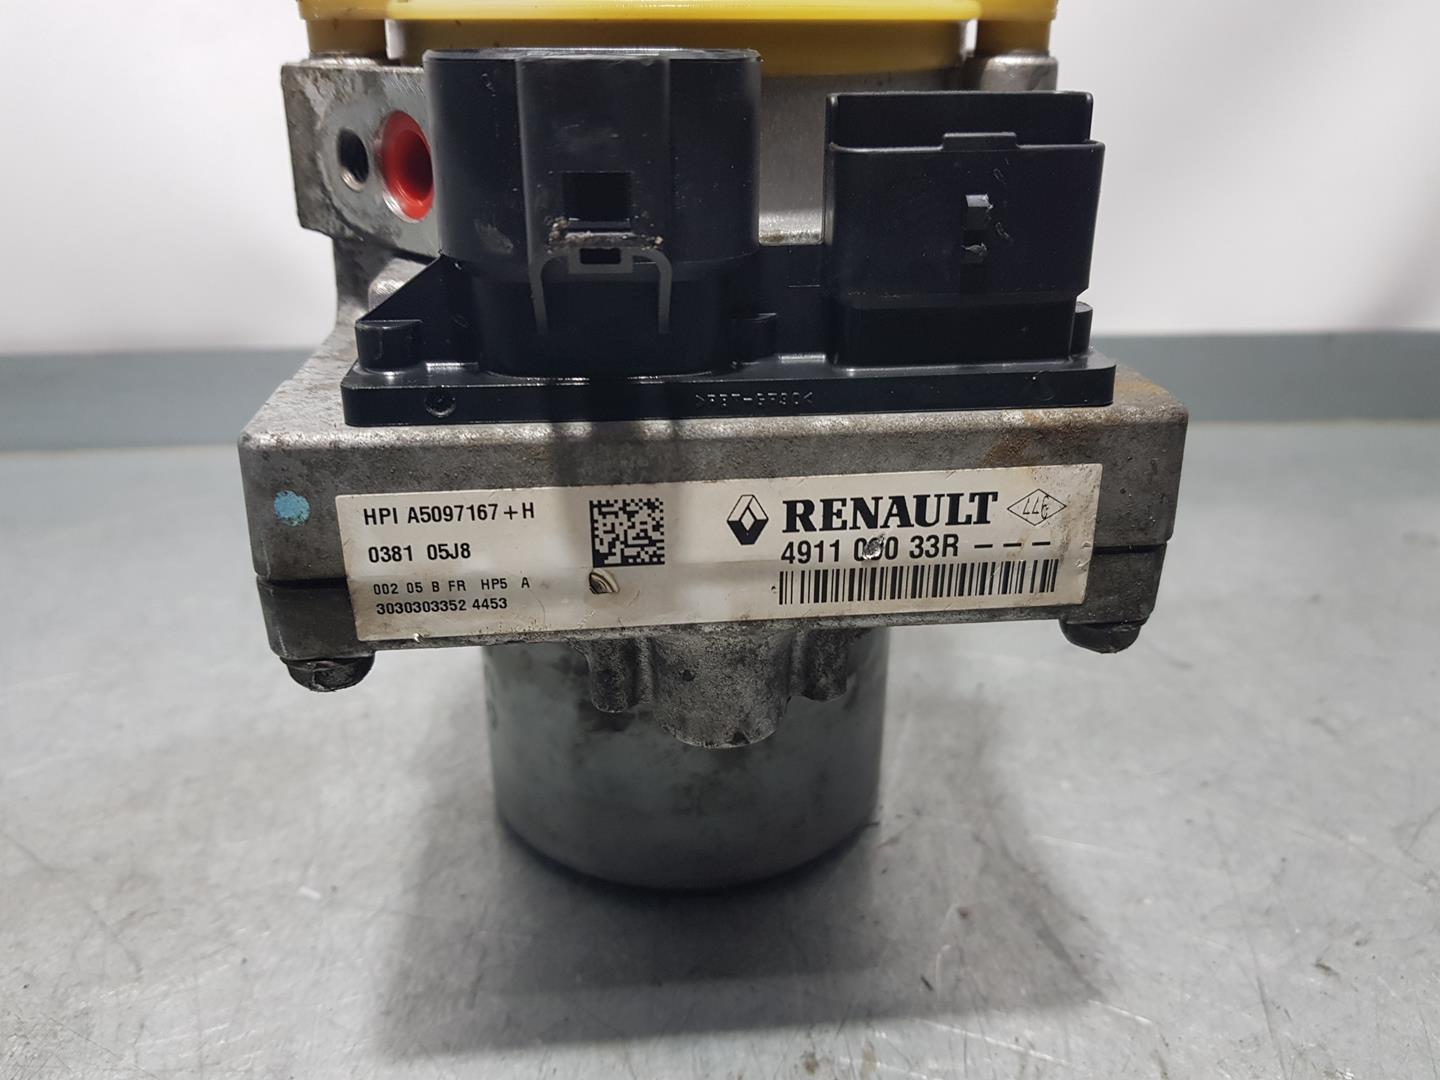 RENAULT Laguna 3 generation (2007-2015) Power Steering Pump 481100033R, A5097167H, HPI 23722581